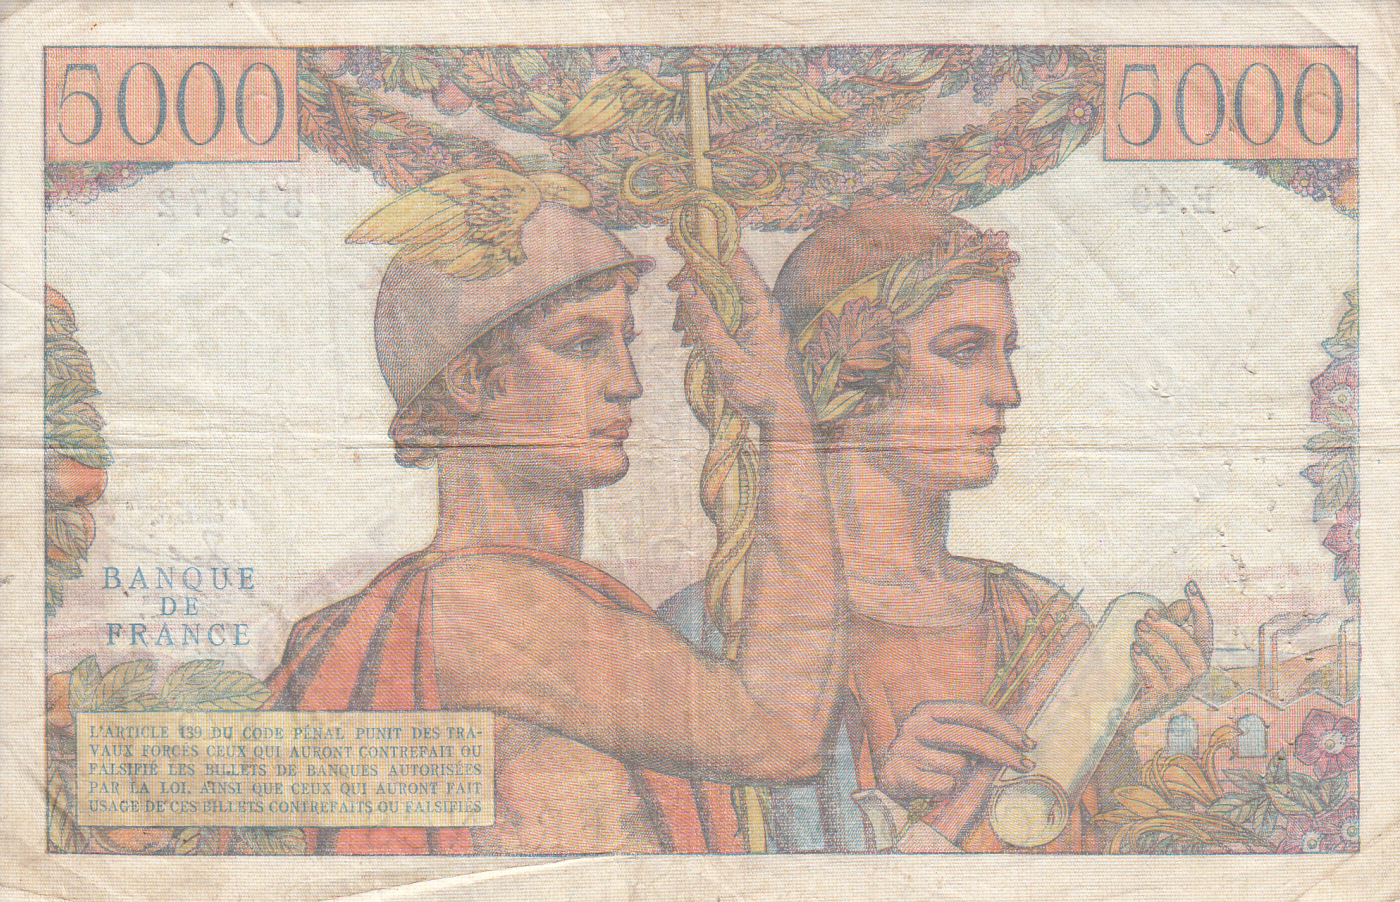 5000 Francs 1951 (1. II.), 1949-1957 Issue - 5000 Francs - France ...